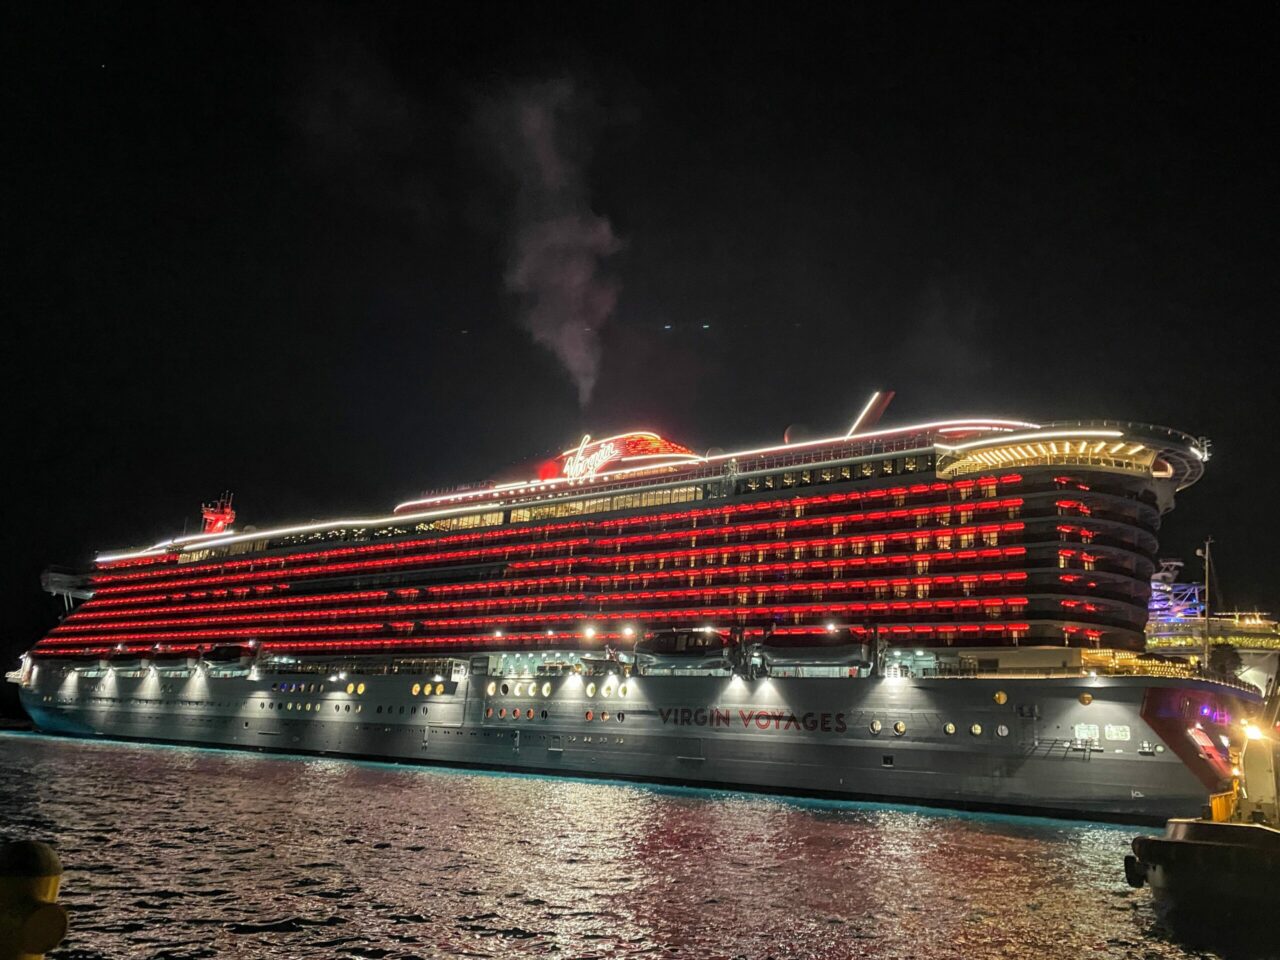 Virgin Voyages Scarlet Lady cruise ship 